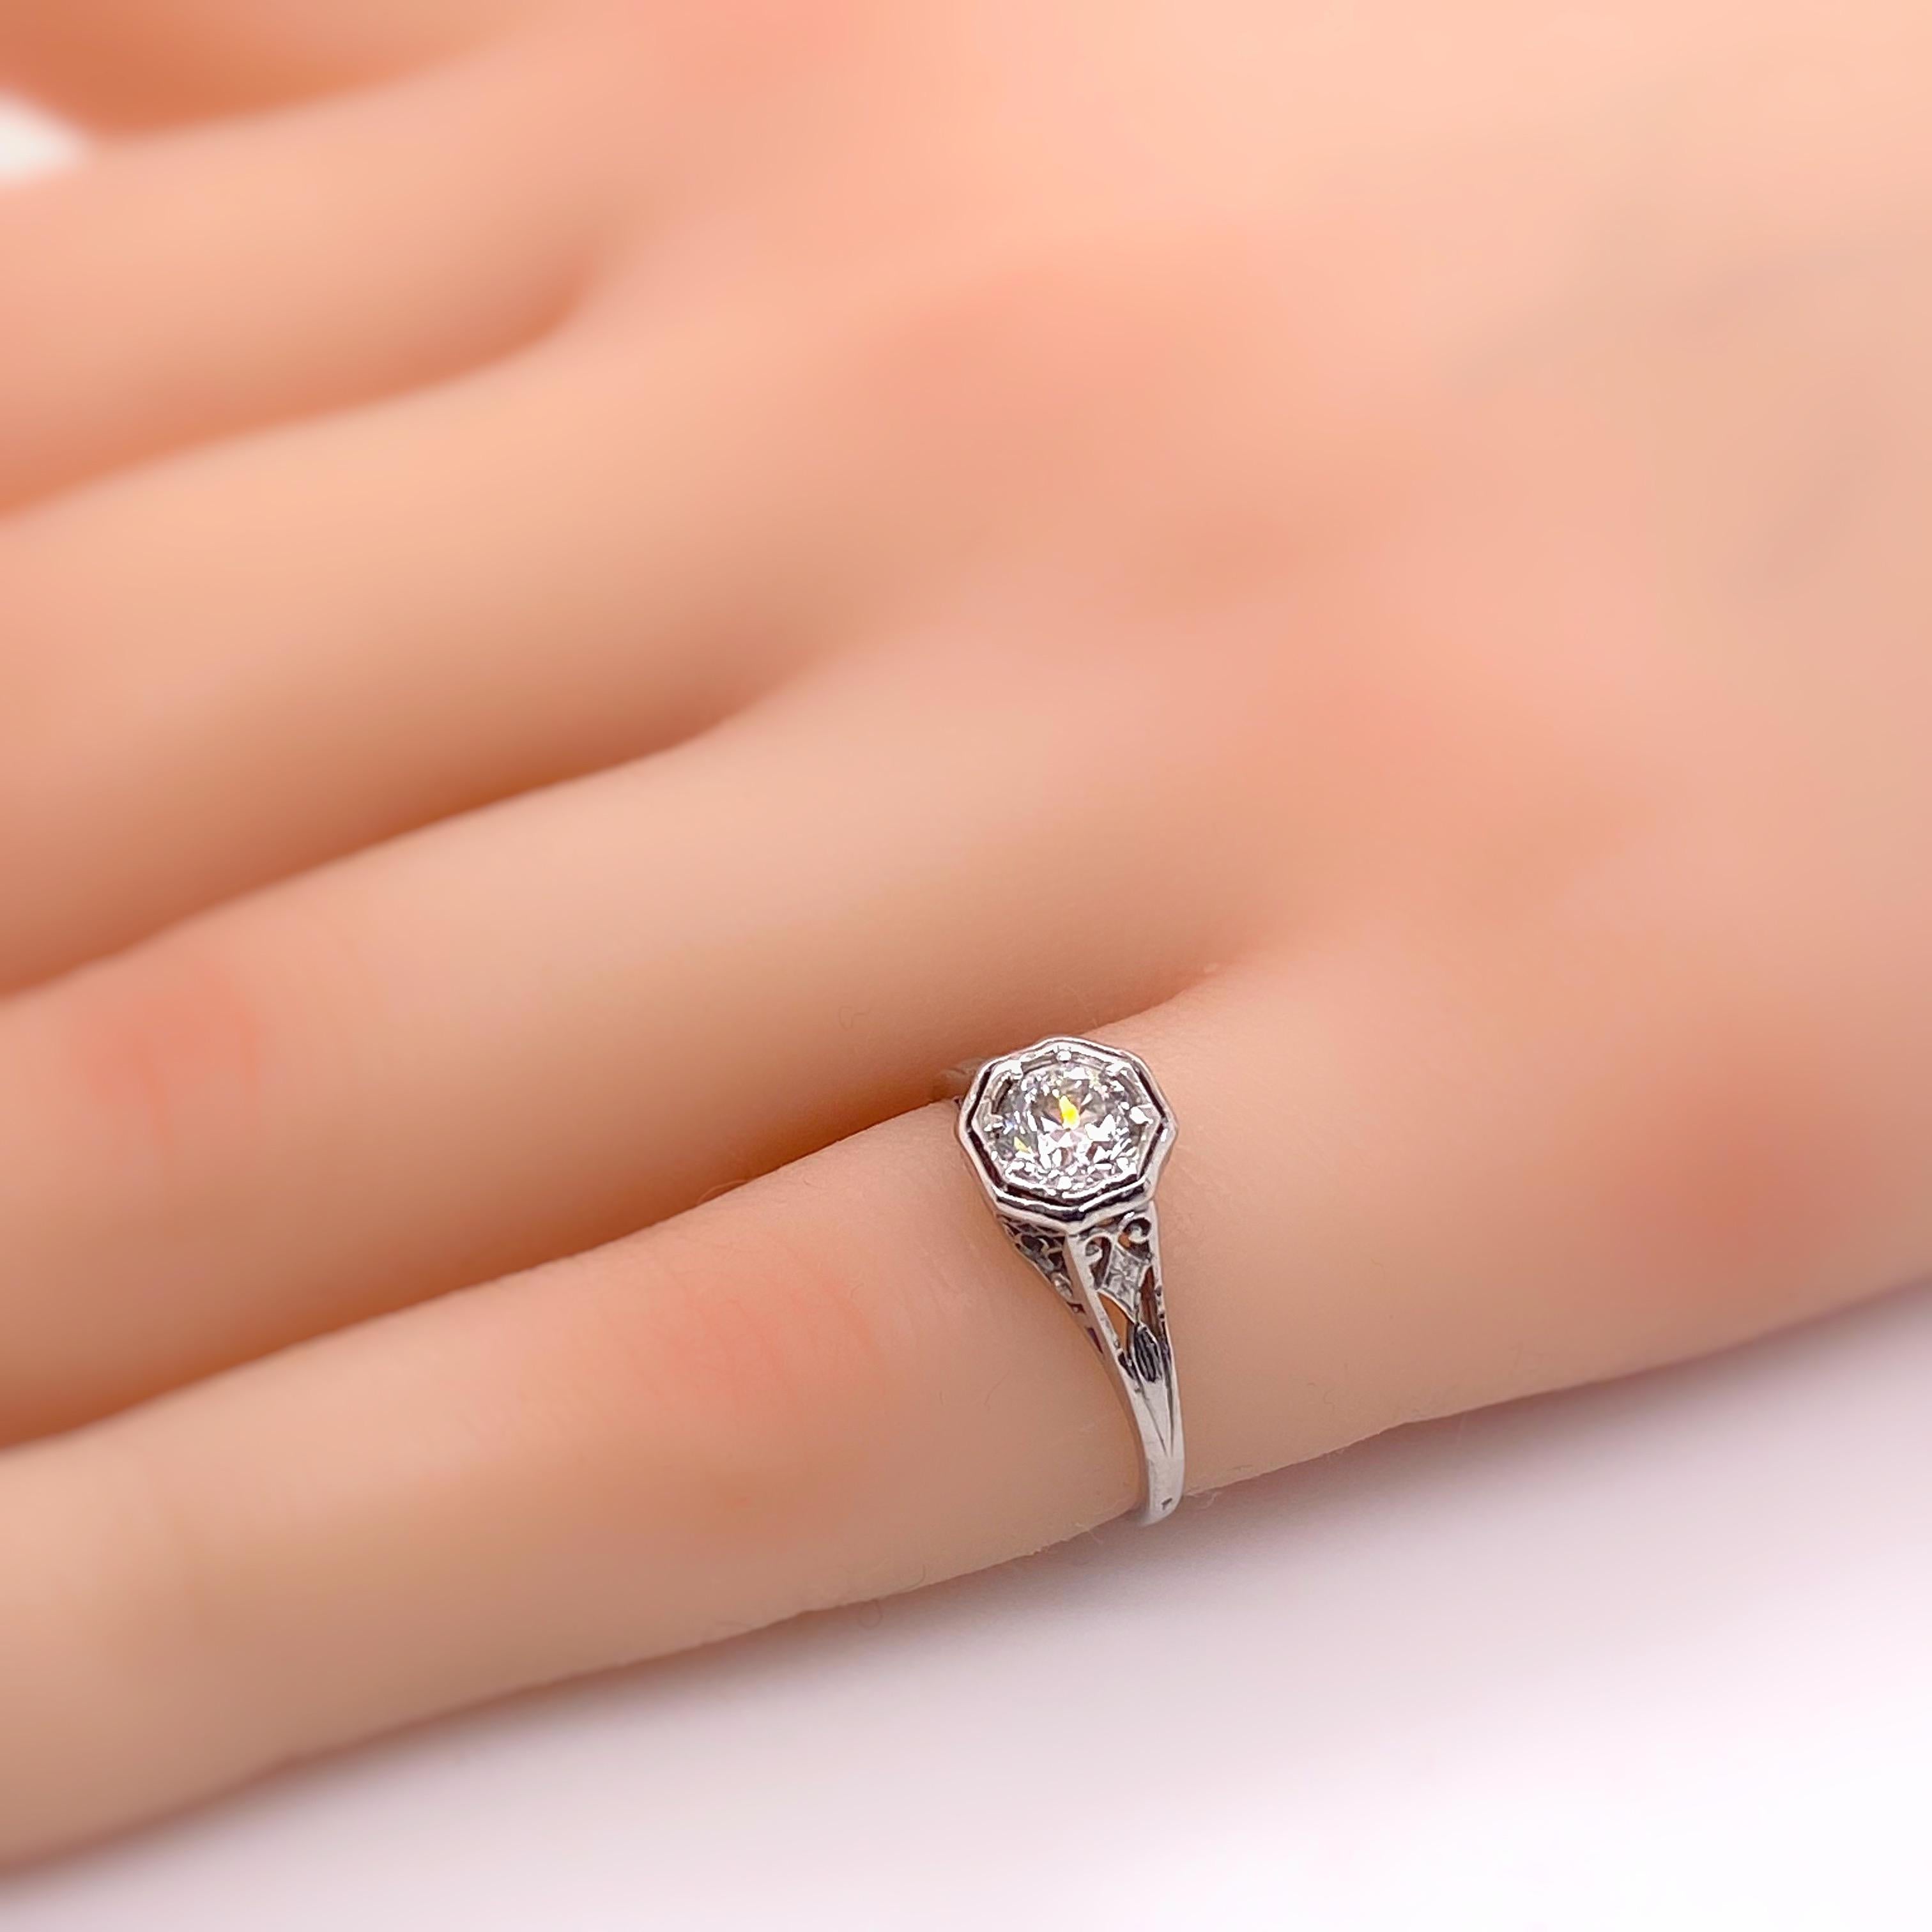 0.55 carat diamond ring